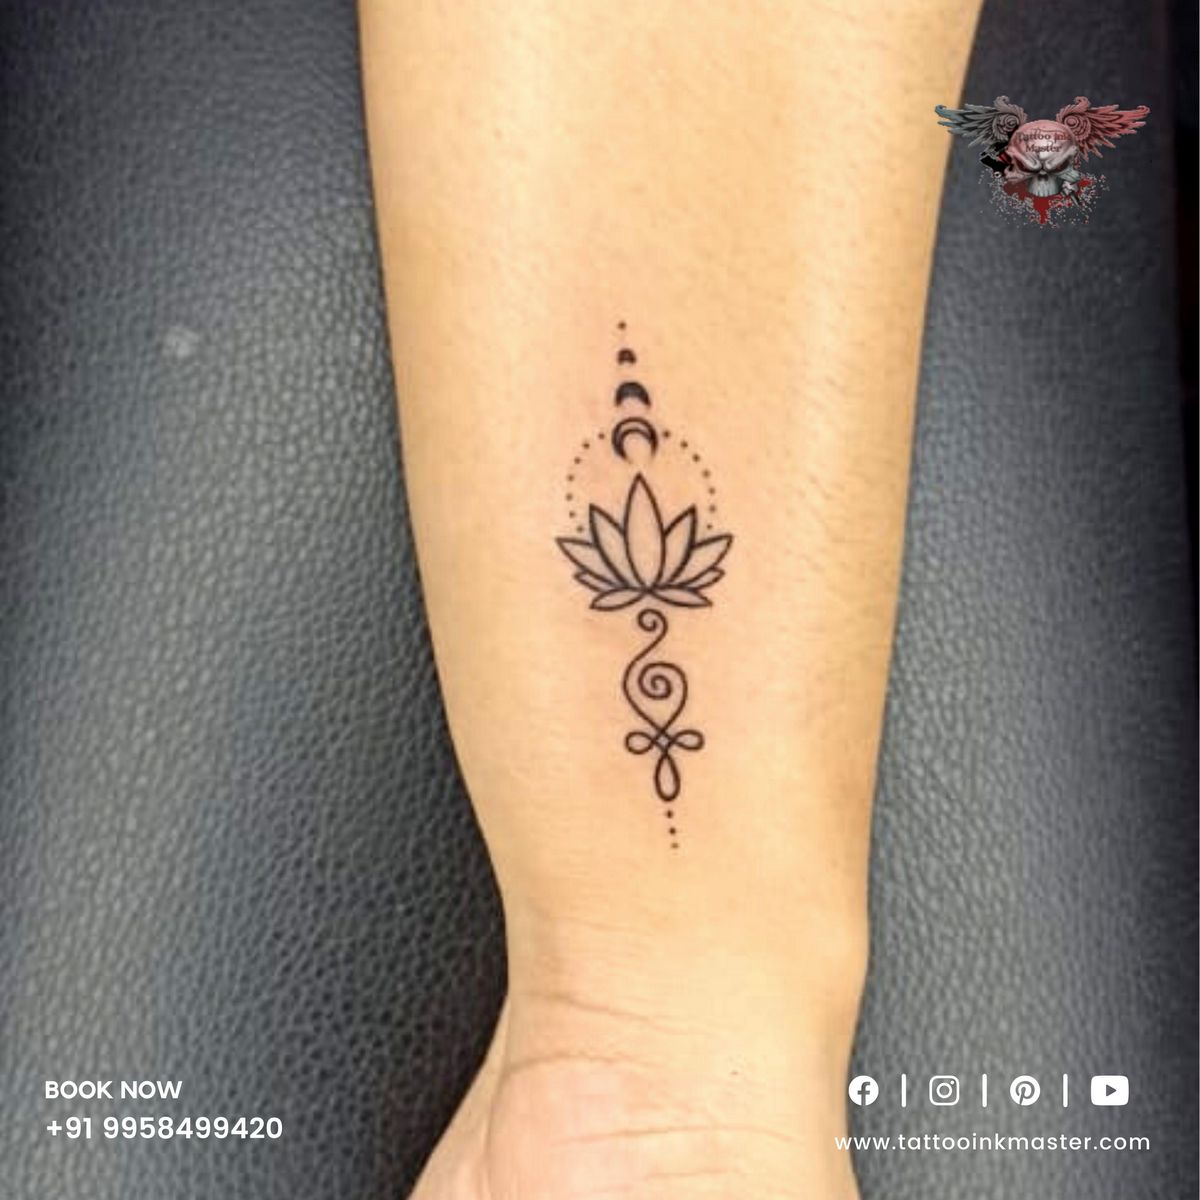 Lotus: The Symbol Of Goddess Laxmi | Tattoo Ink Master